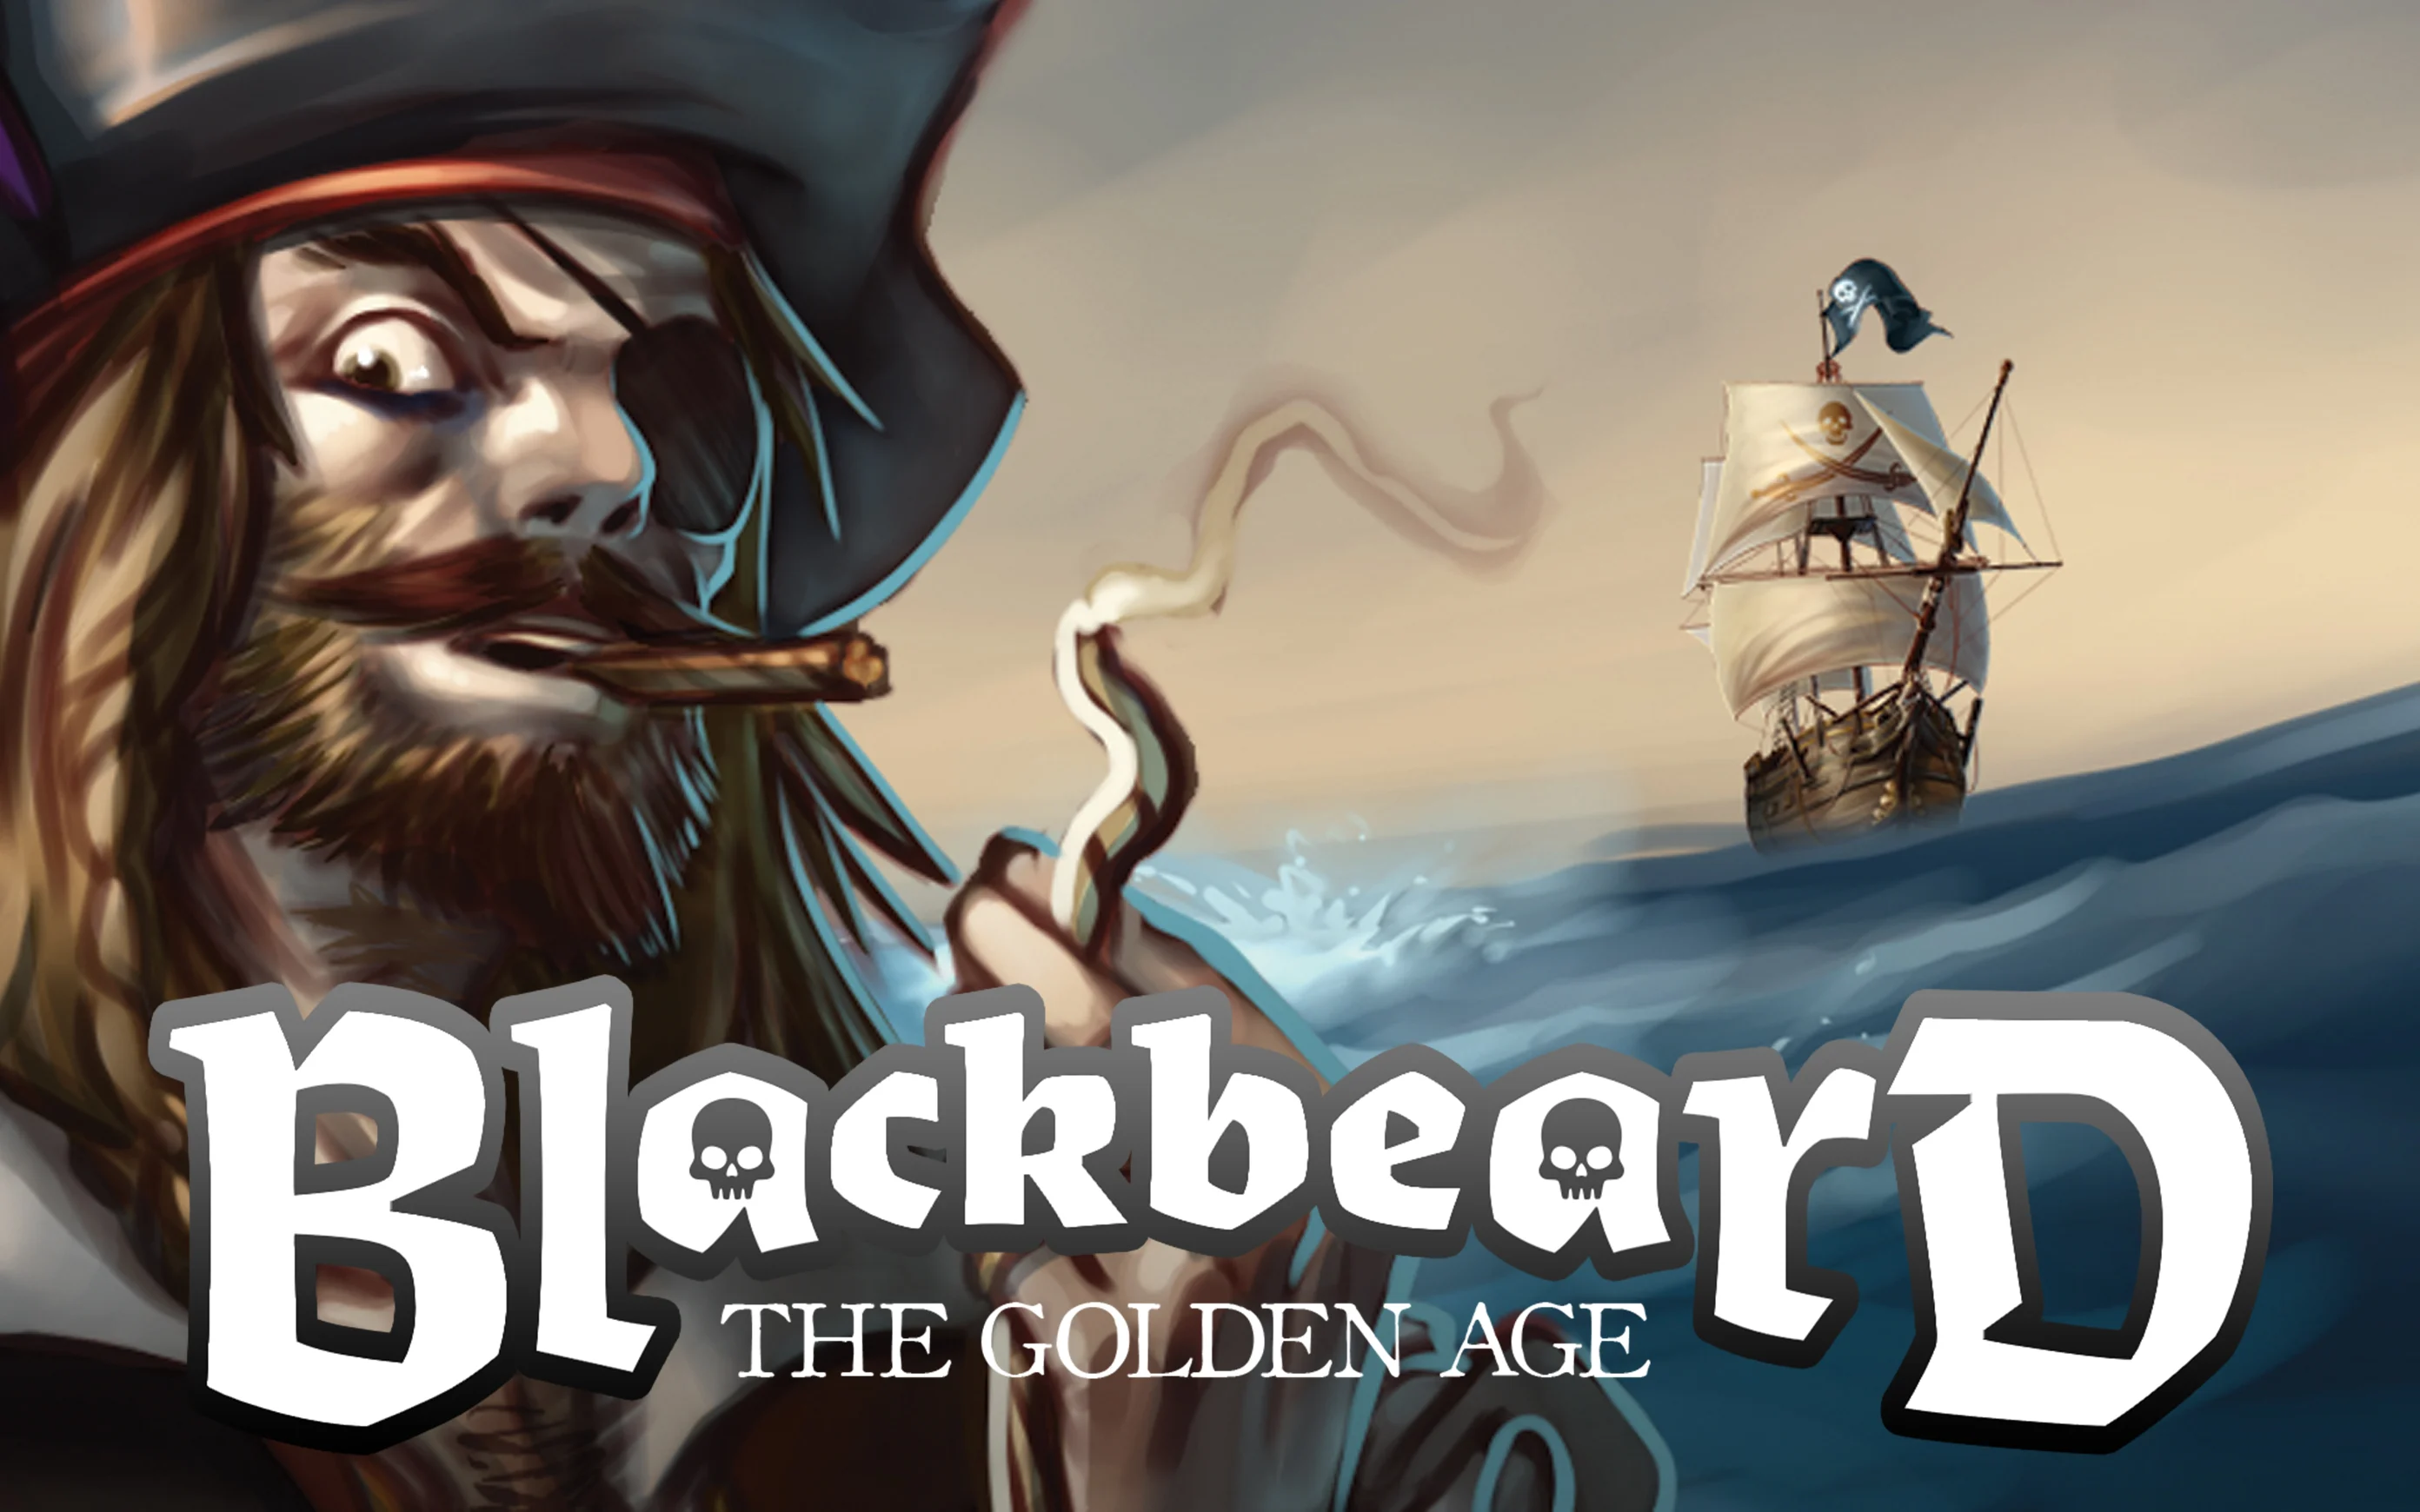 Грайте у Blackbeard - The Golden Age в онлайн-казино Starcasino.be